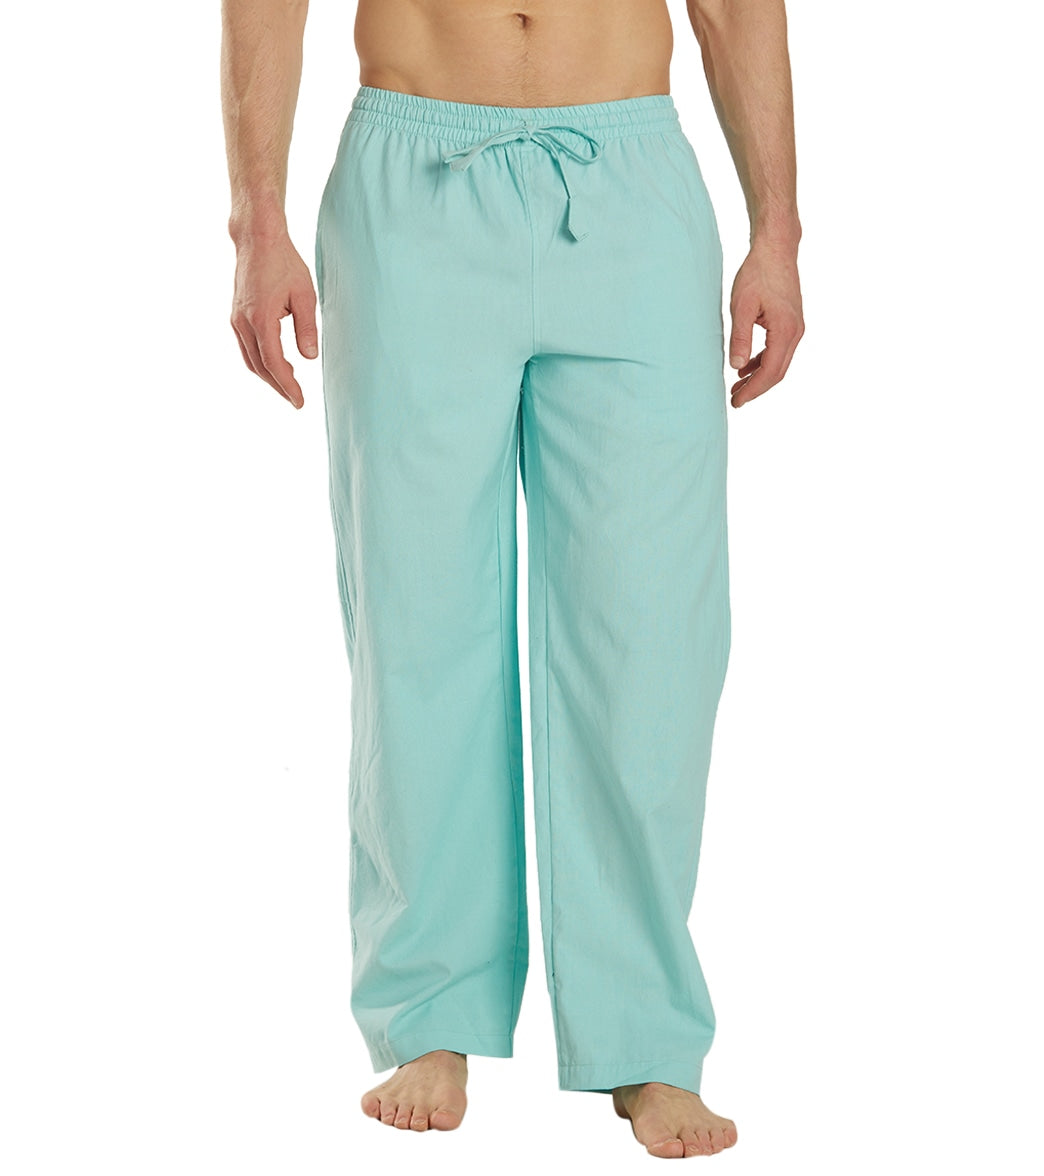 Pact Pants Men’s Size Large Drawstring Blue Organic Cotton Lounge Yoga